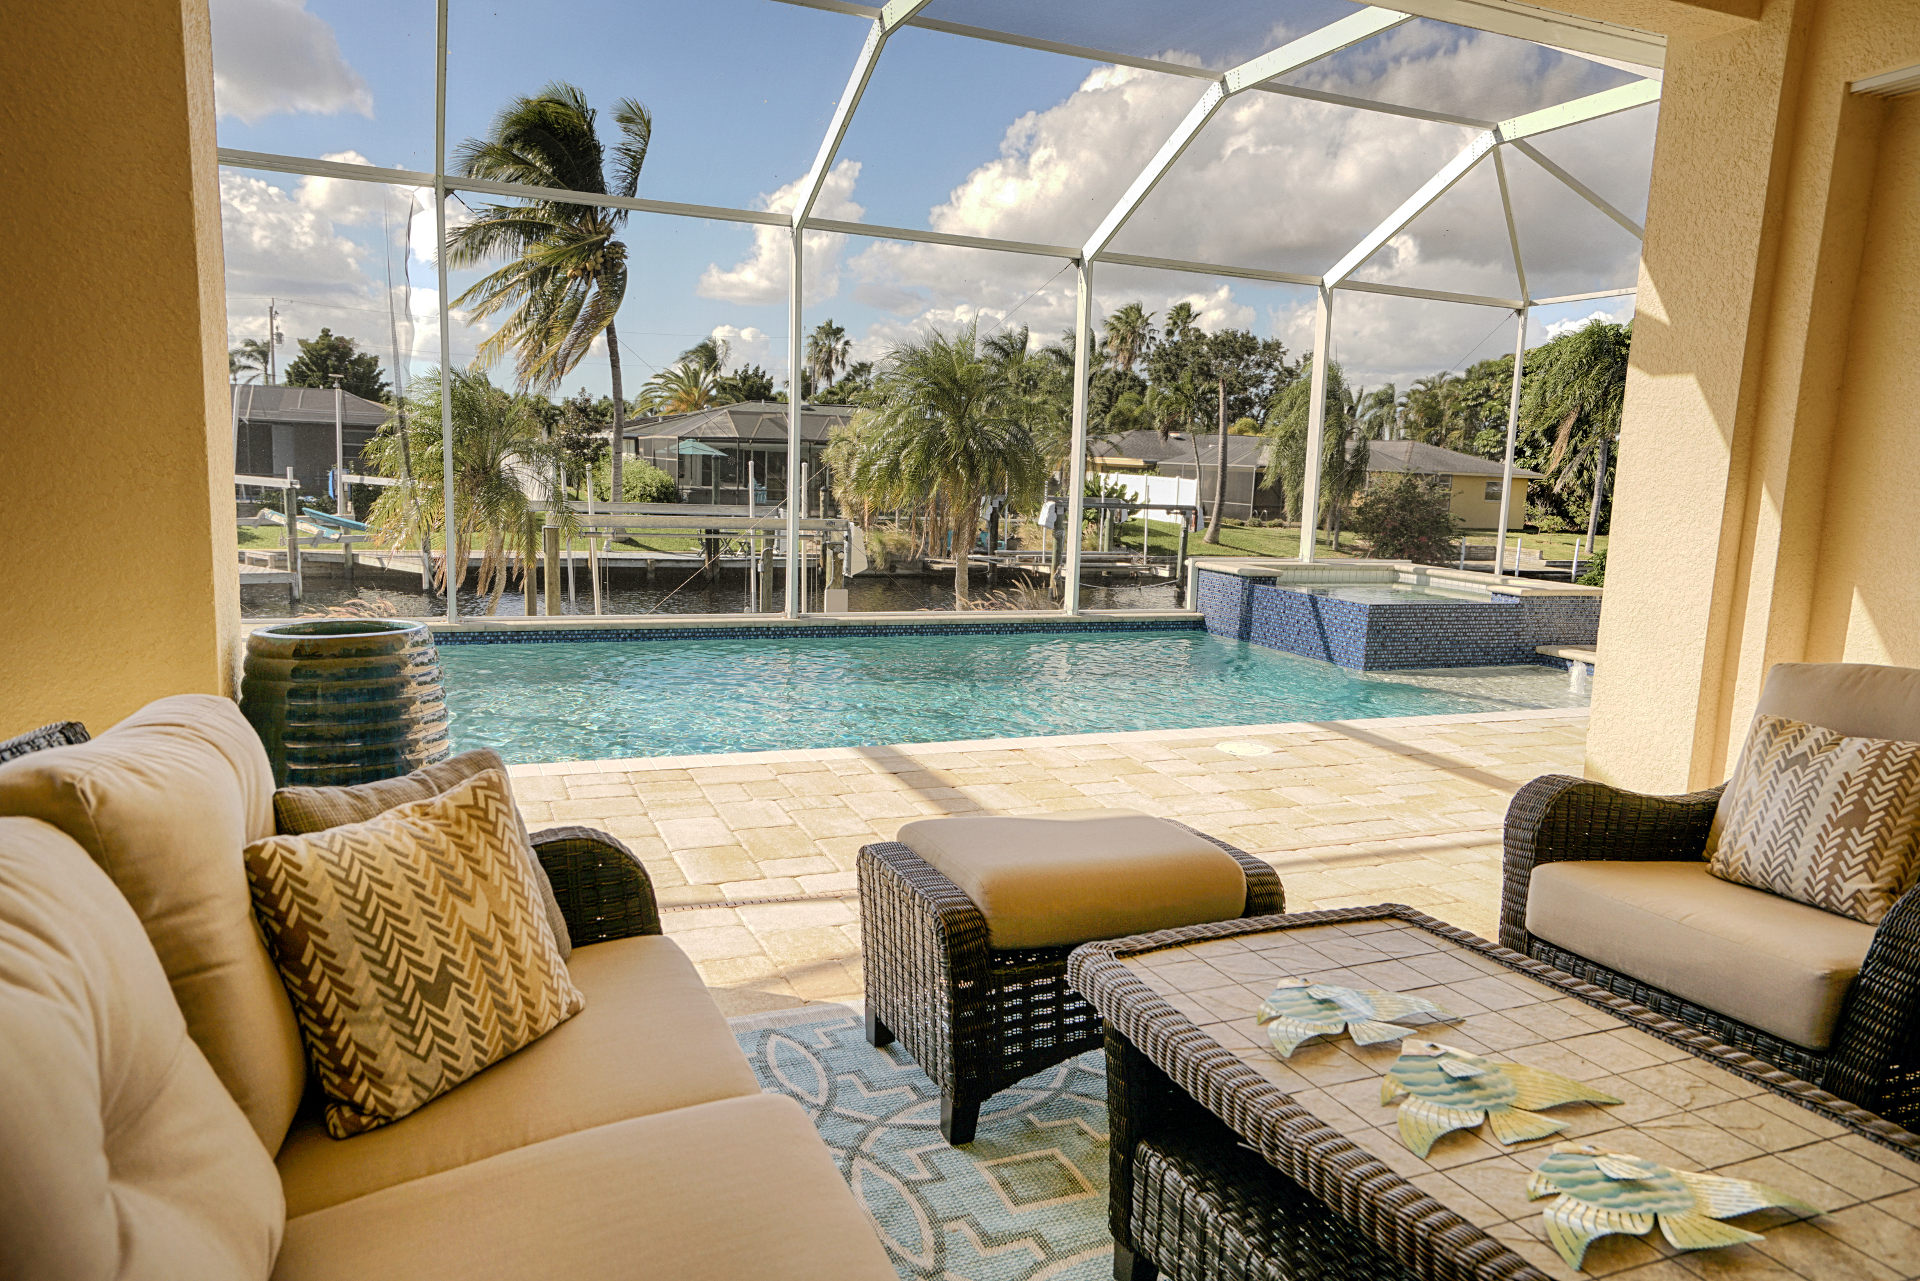 Pool area in Florida